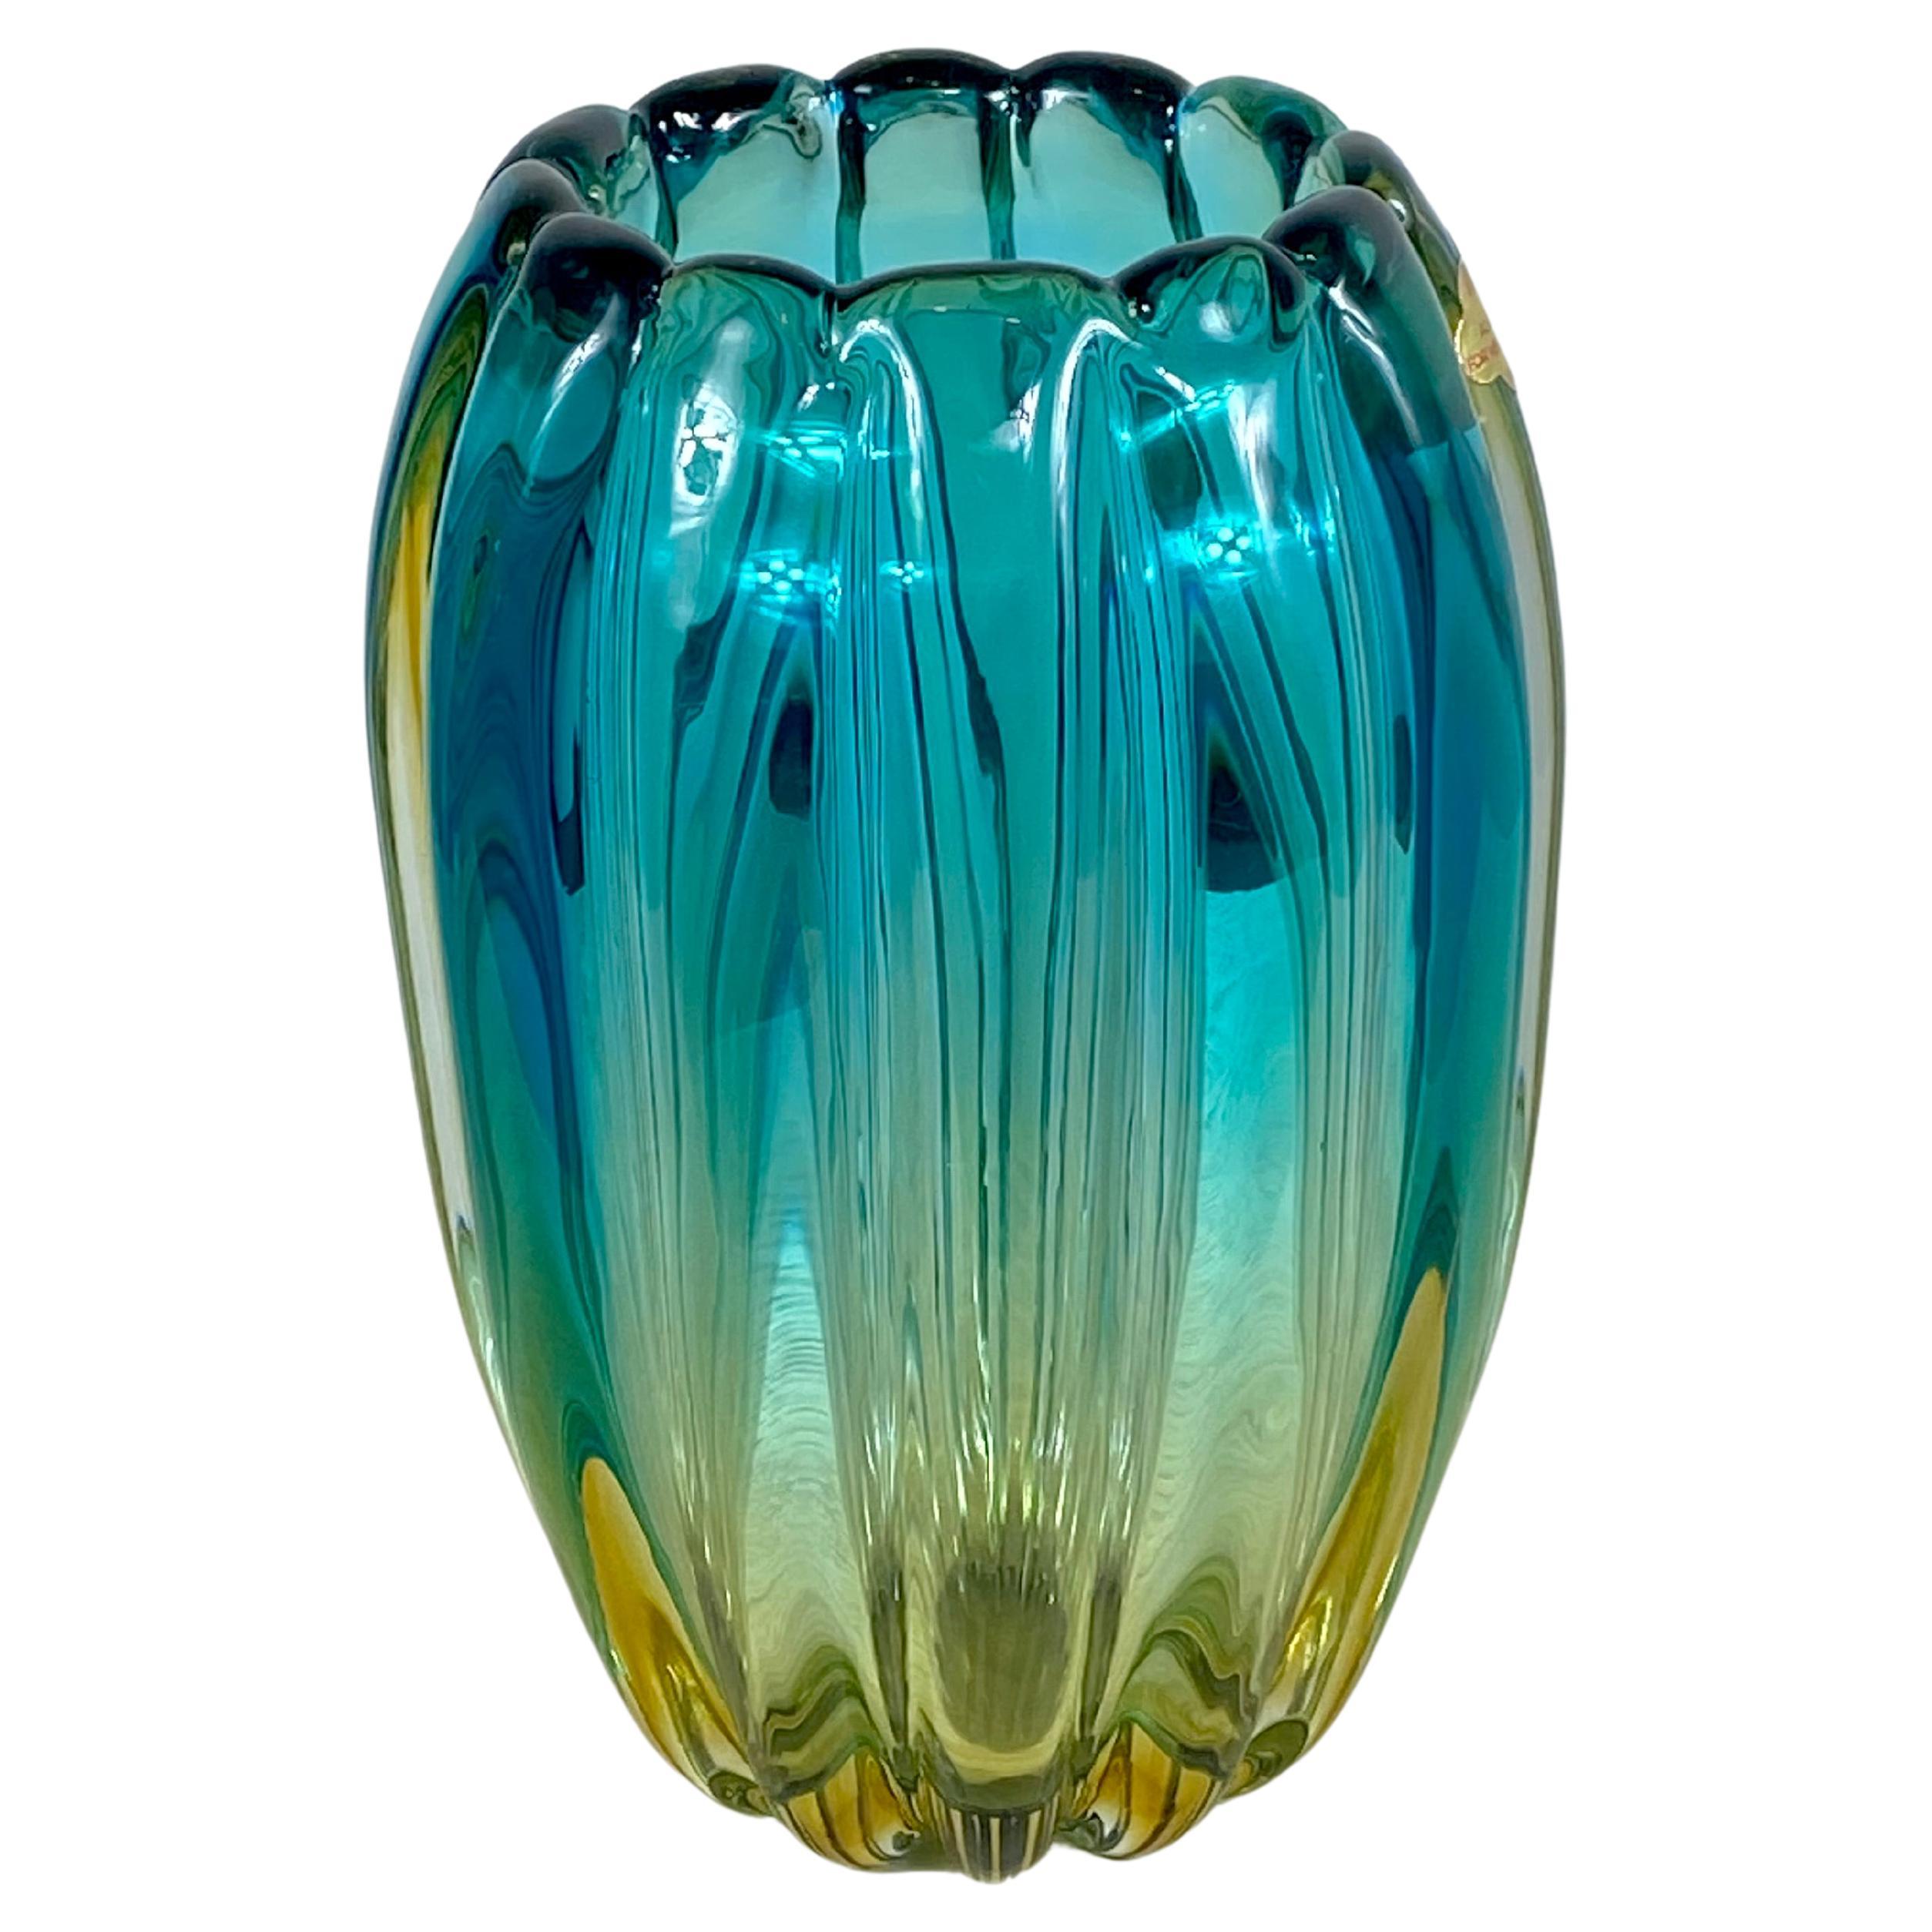 Turquoise Alfredo Barbini Murano Vase